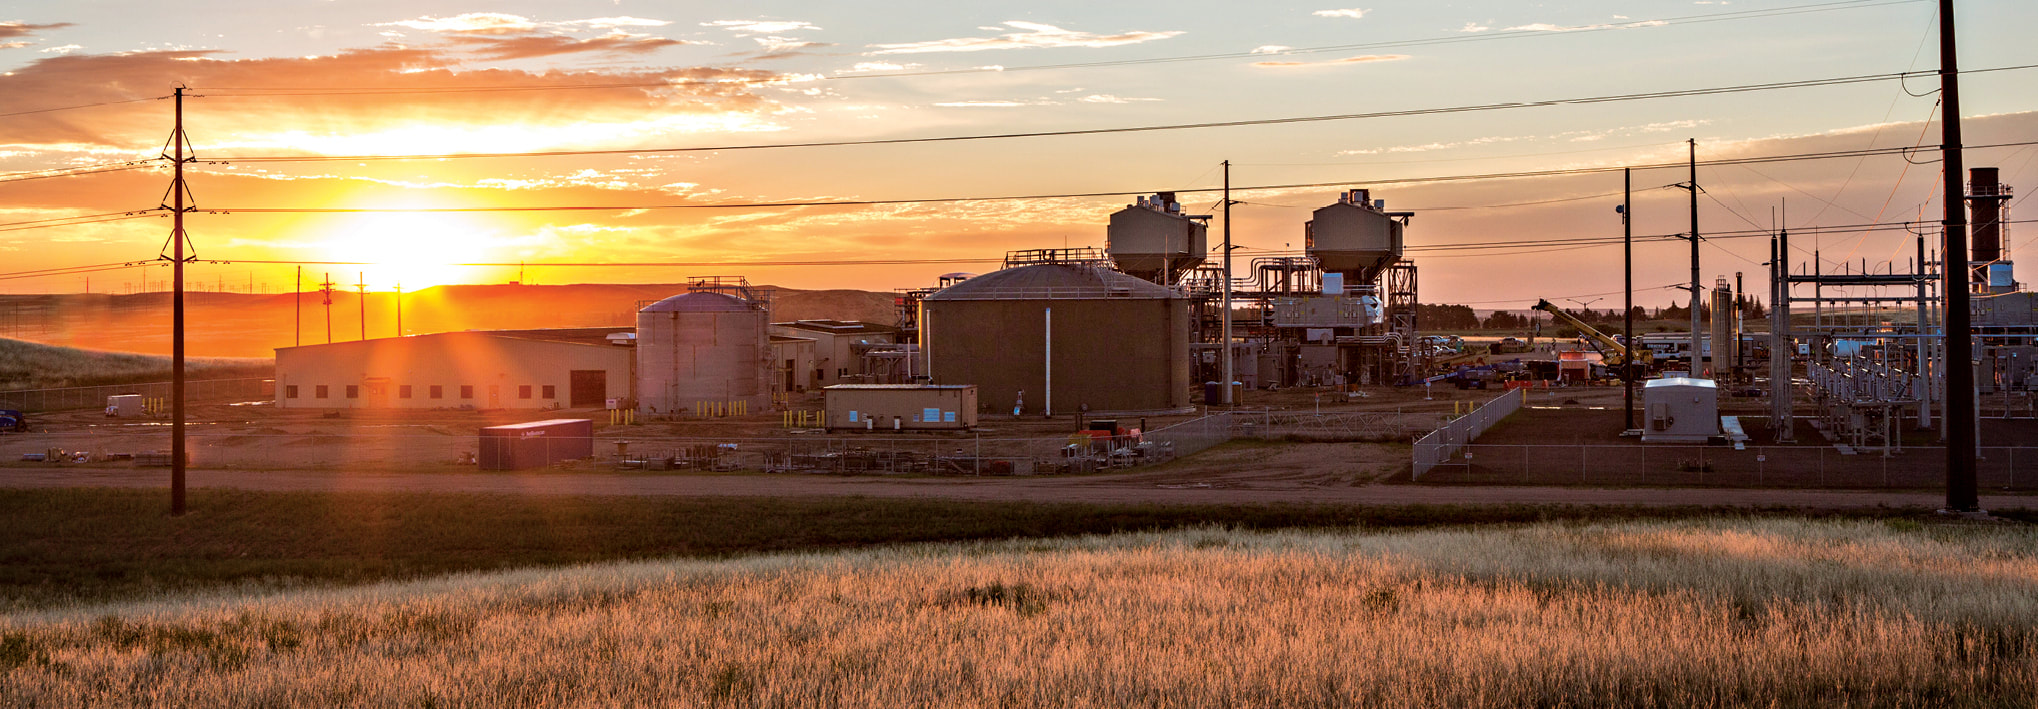 Black Hills Corporation plant at sunset